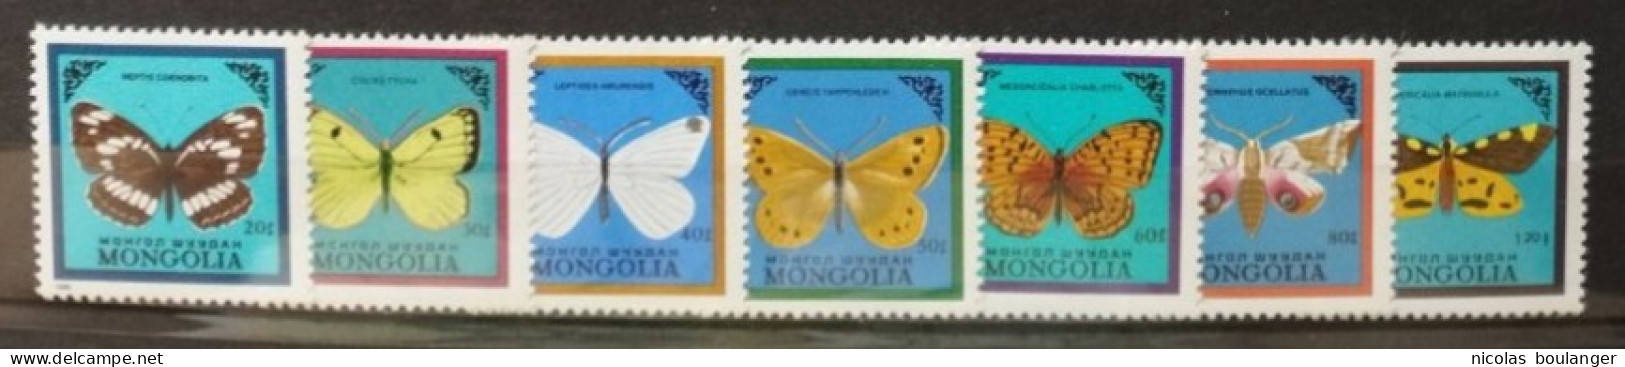 Mongolie  1986 / Yvert N°1428-1434 / ** - Mongolia